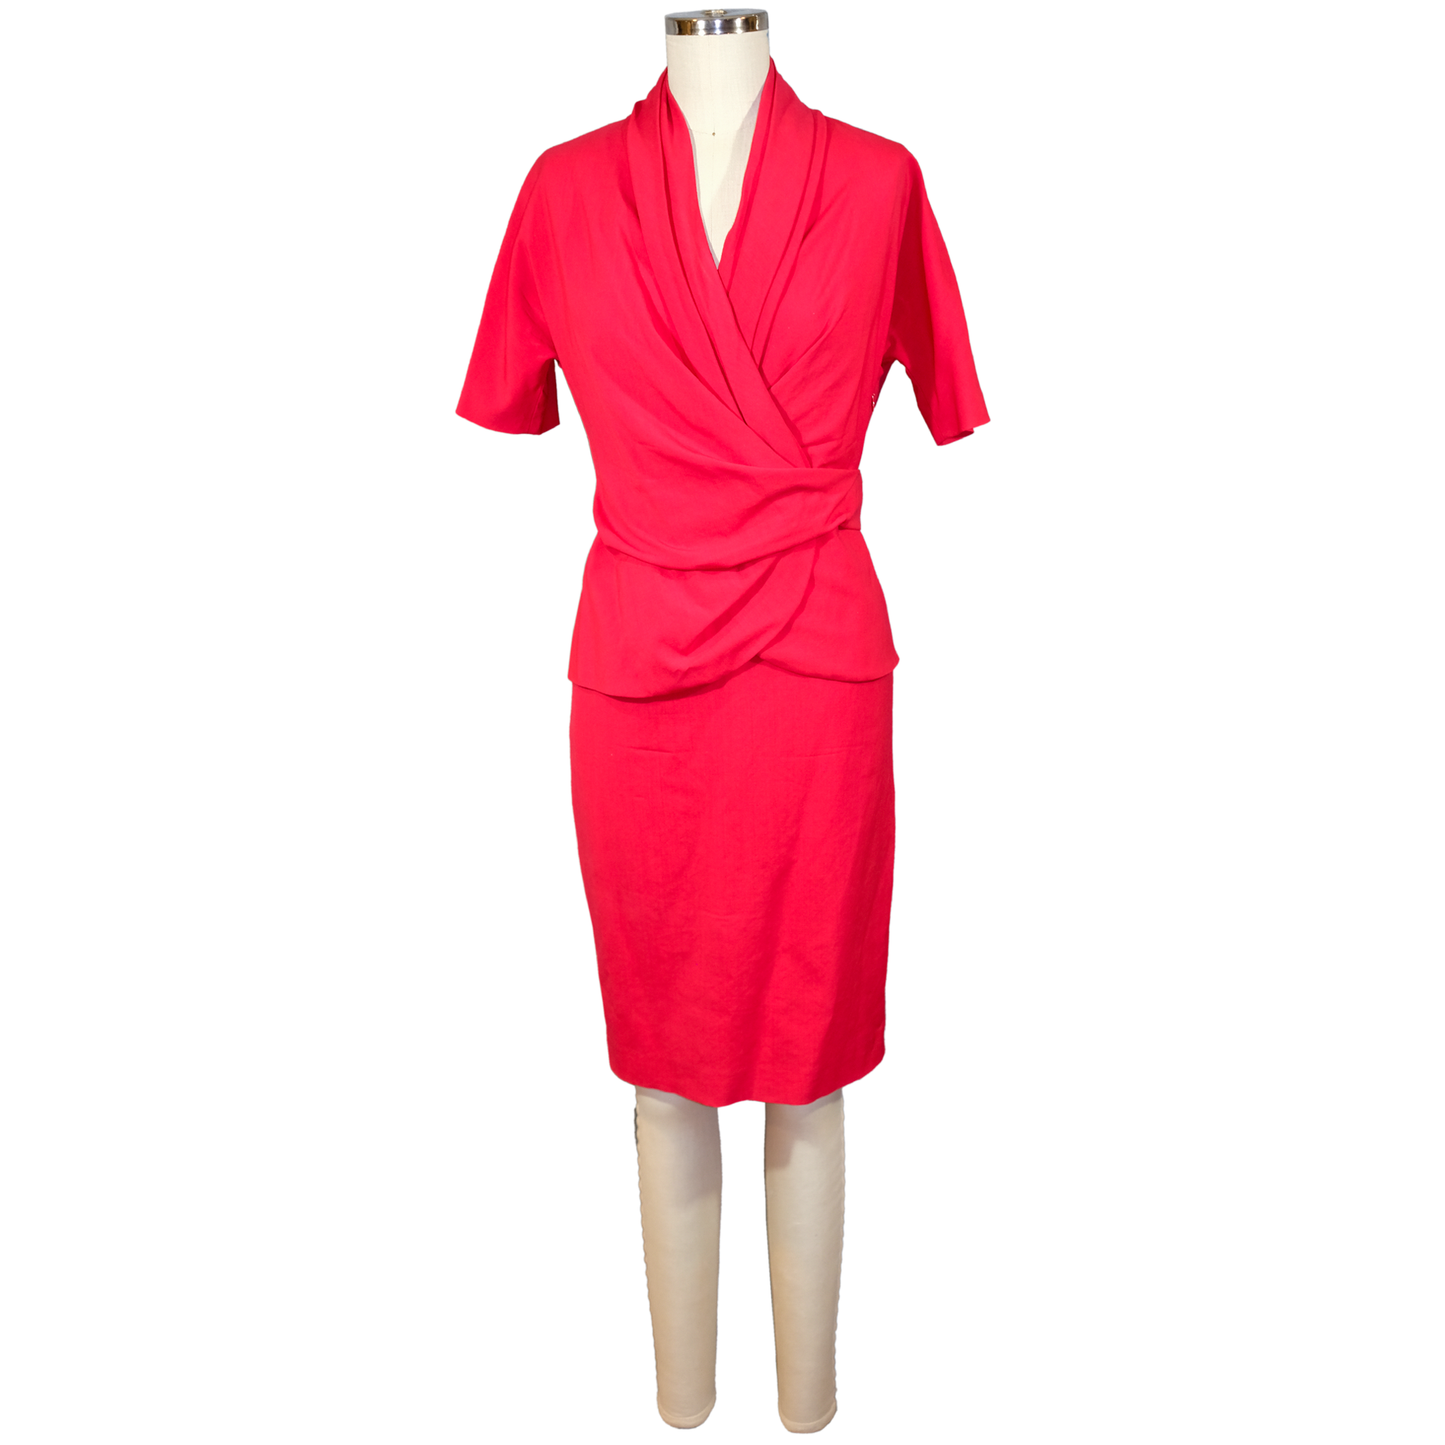 Ports 1961 Red Wrap Dress - Size SM